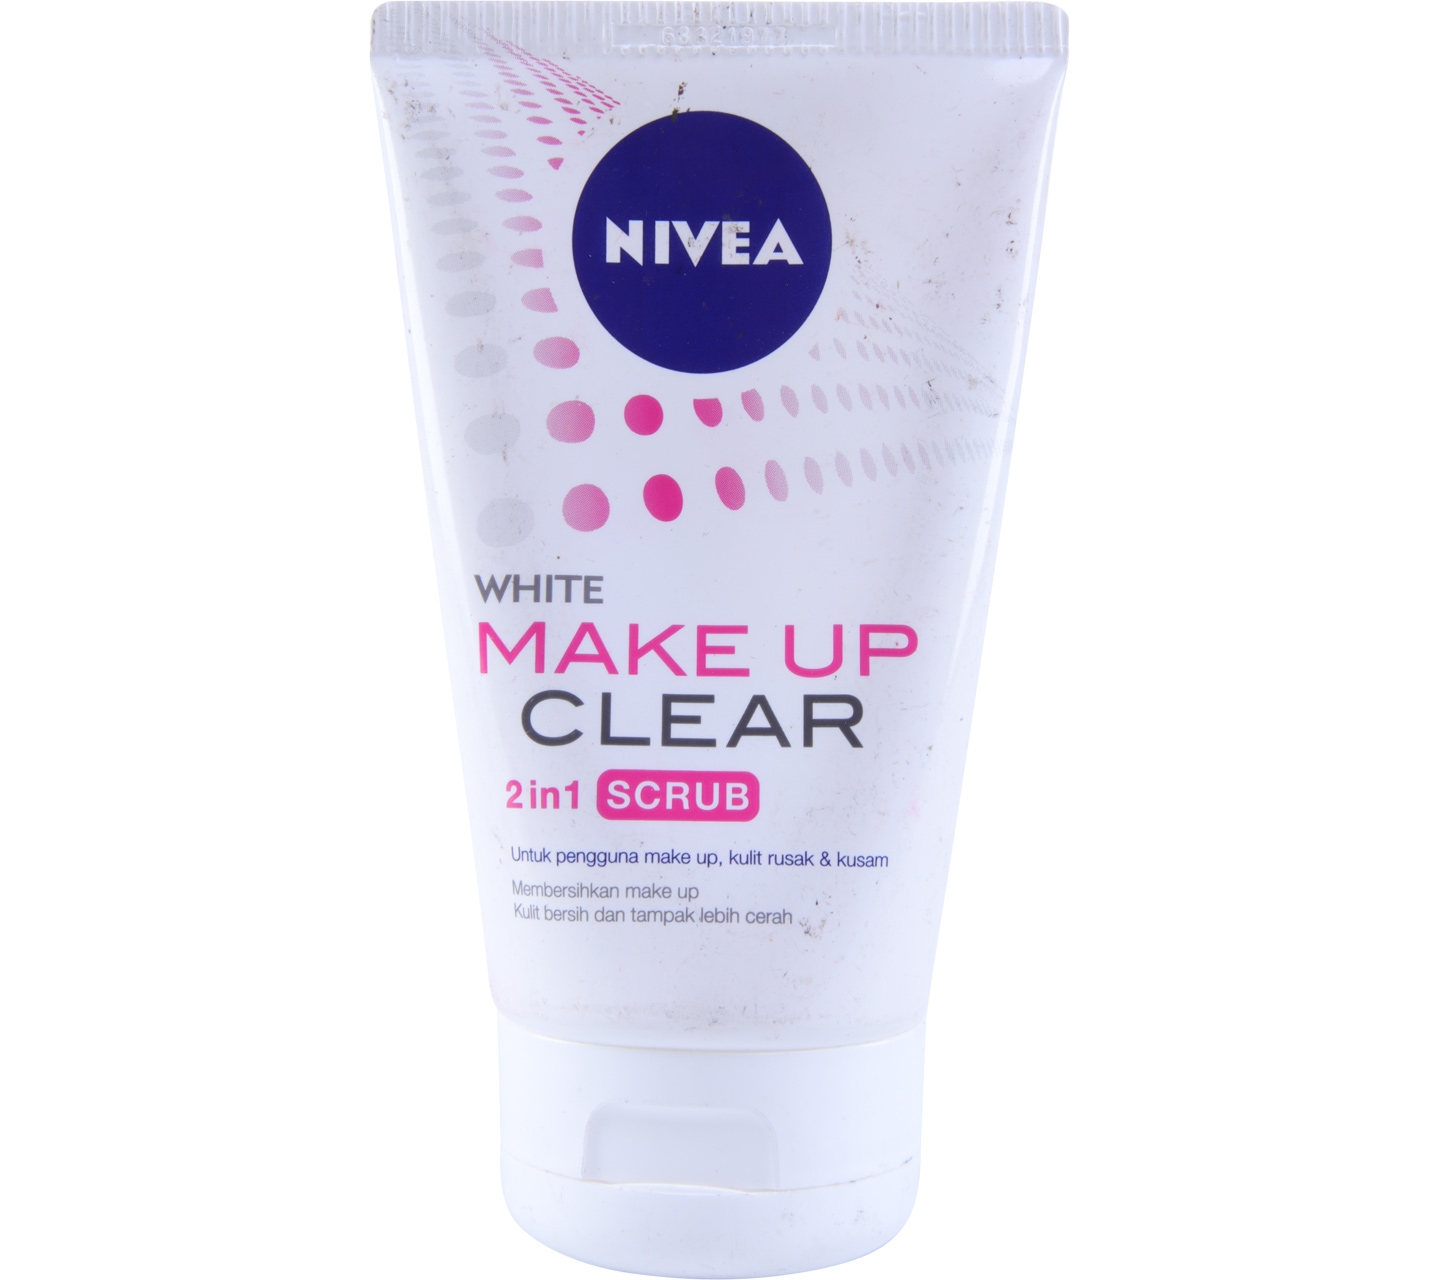 Nivea White Make Up Clear 2in1 Scrub Skin Care